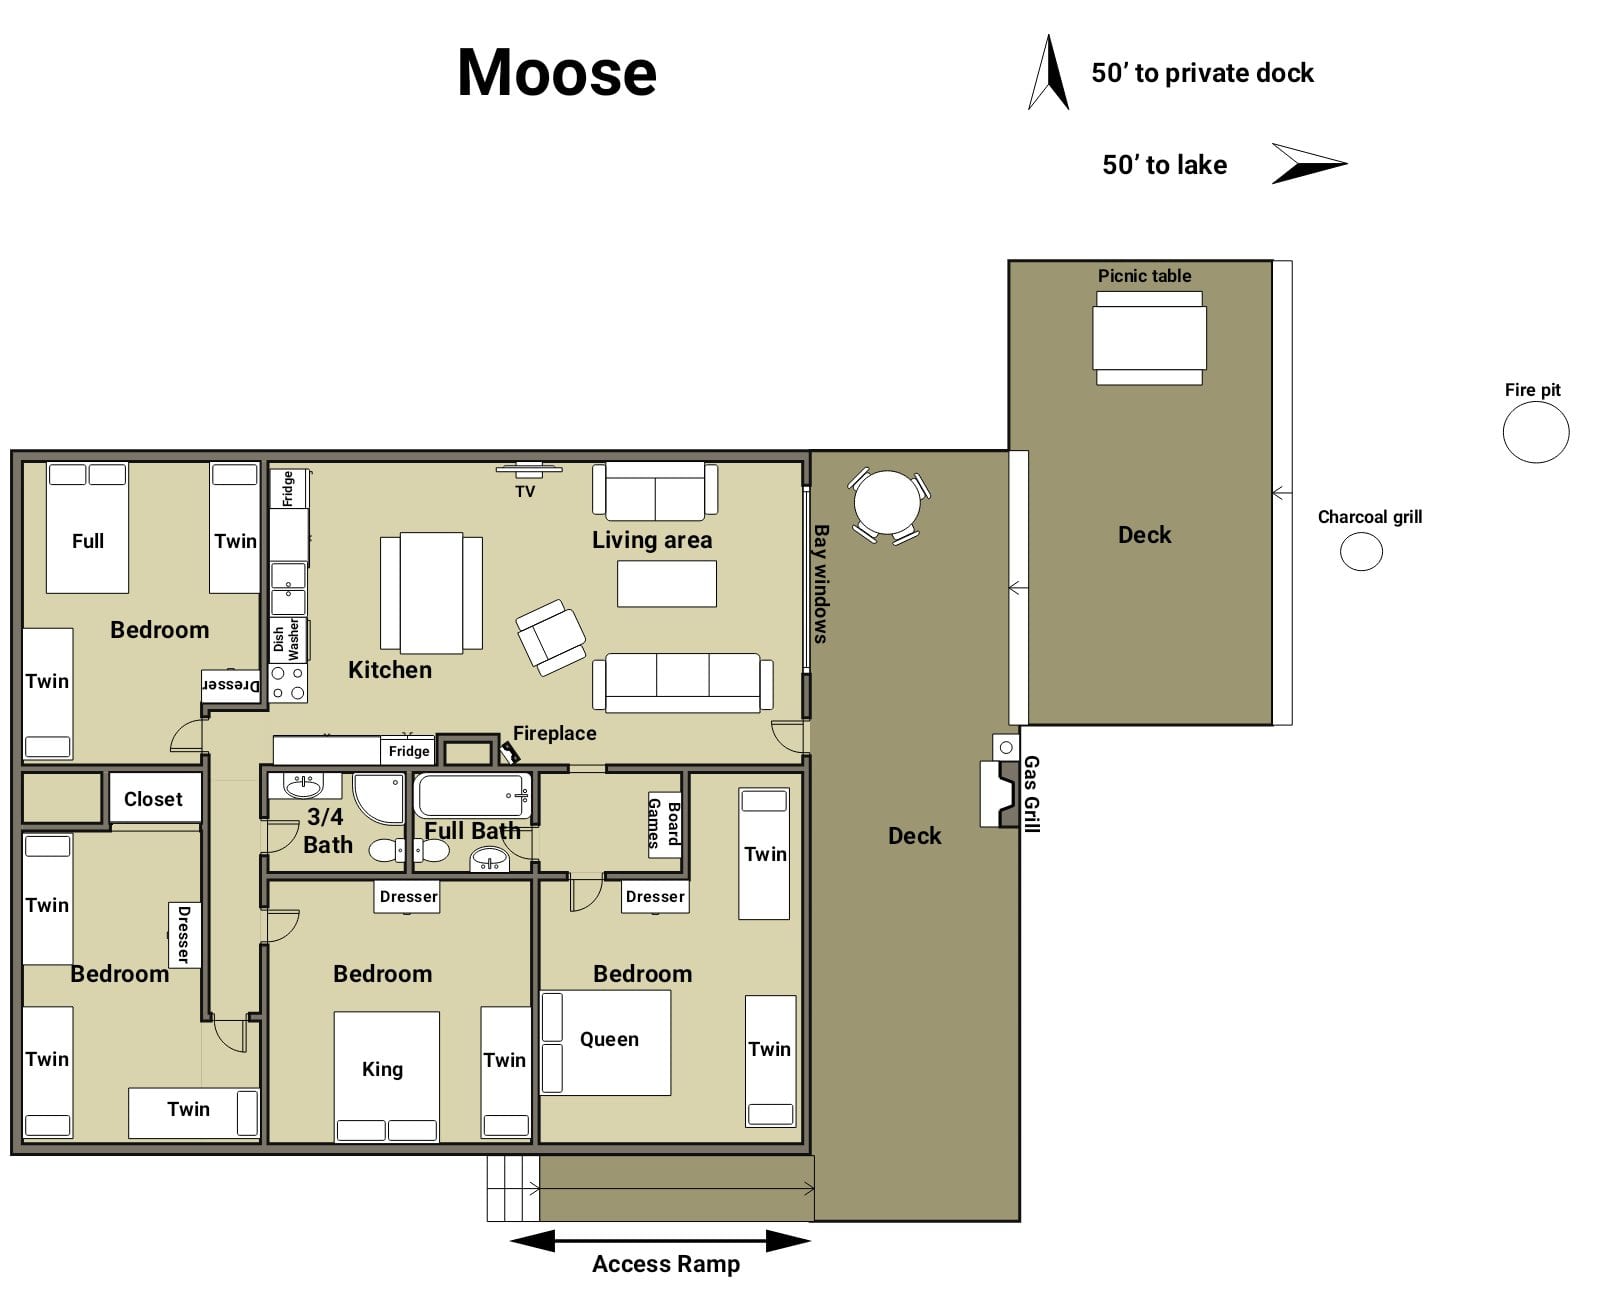 Moose cabin floor plan.